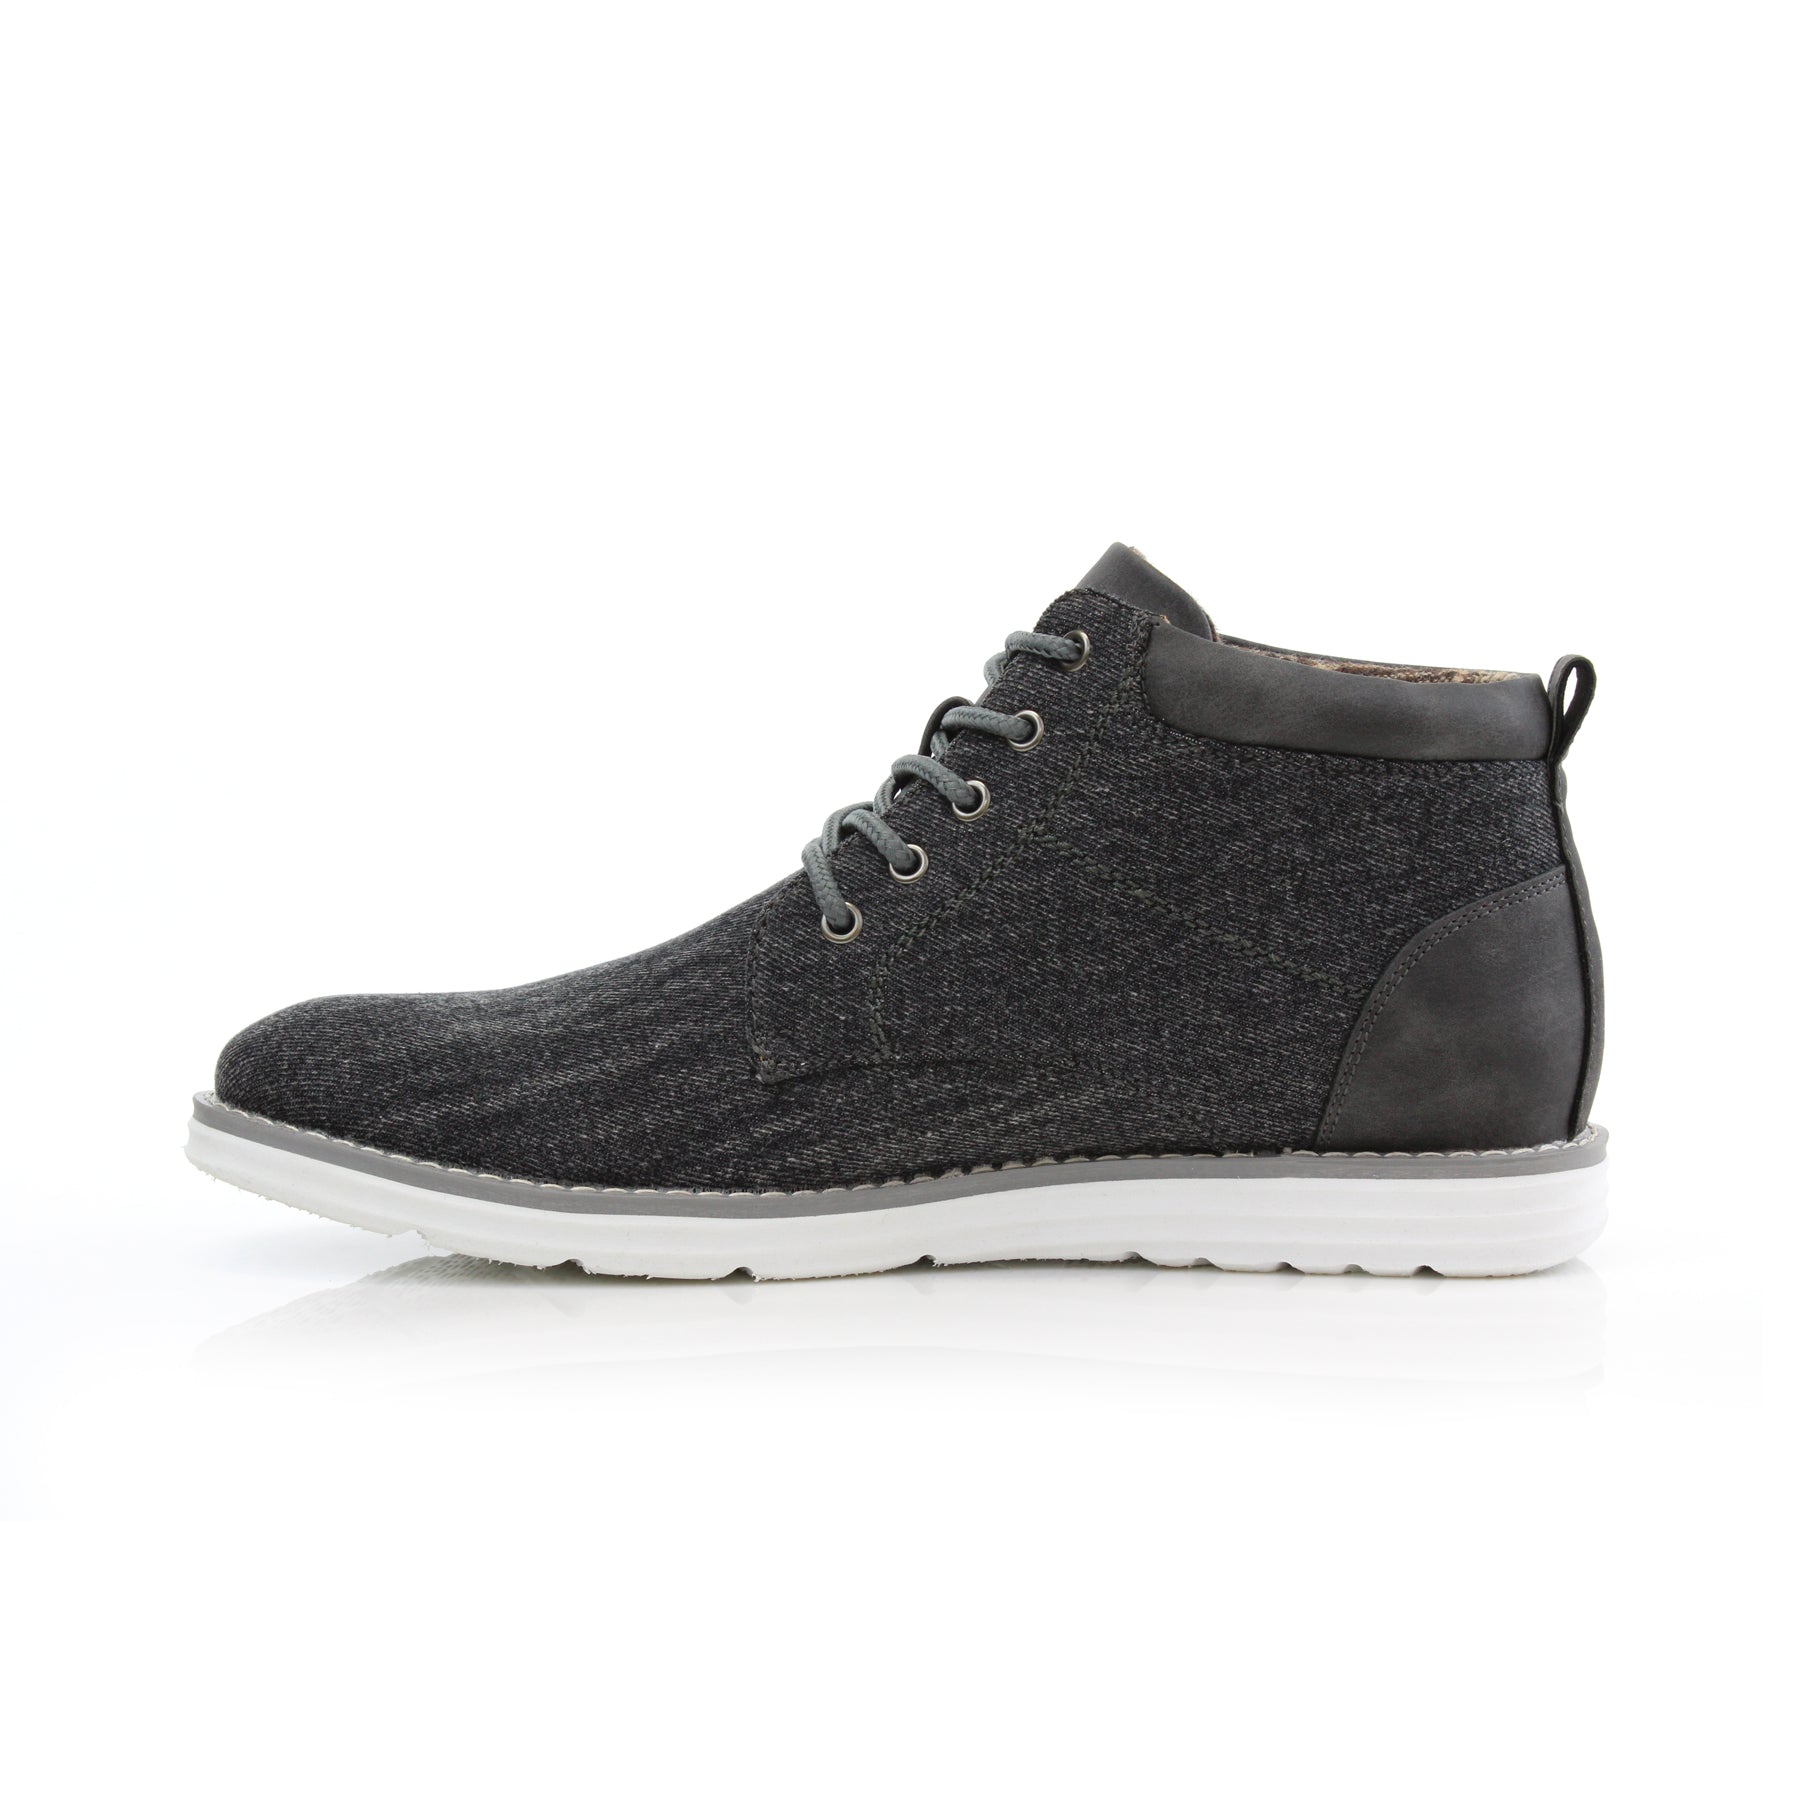 Denim Chukka Sneakers | Dustin by Polar Fox | Conal Footwear | Inner Side Angle View